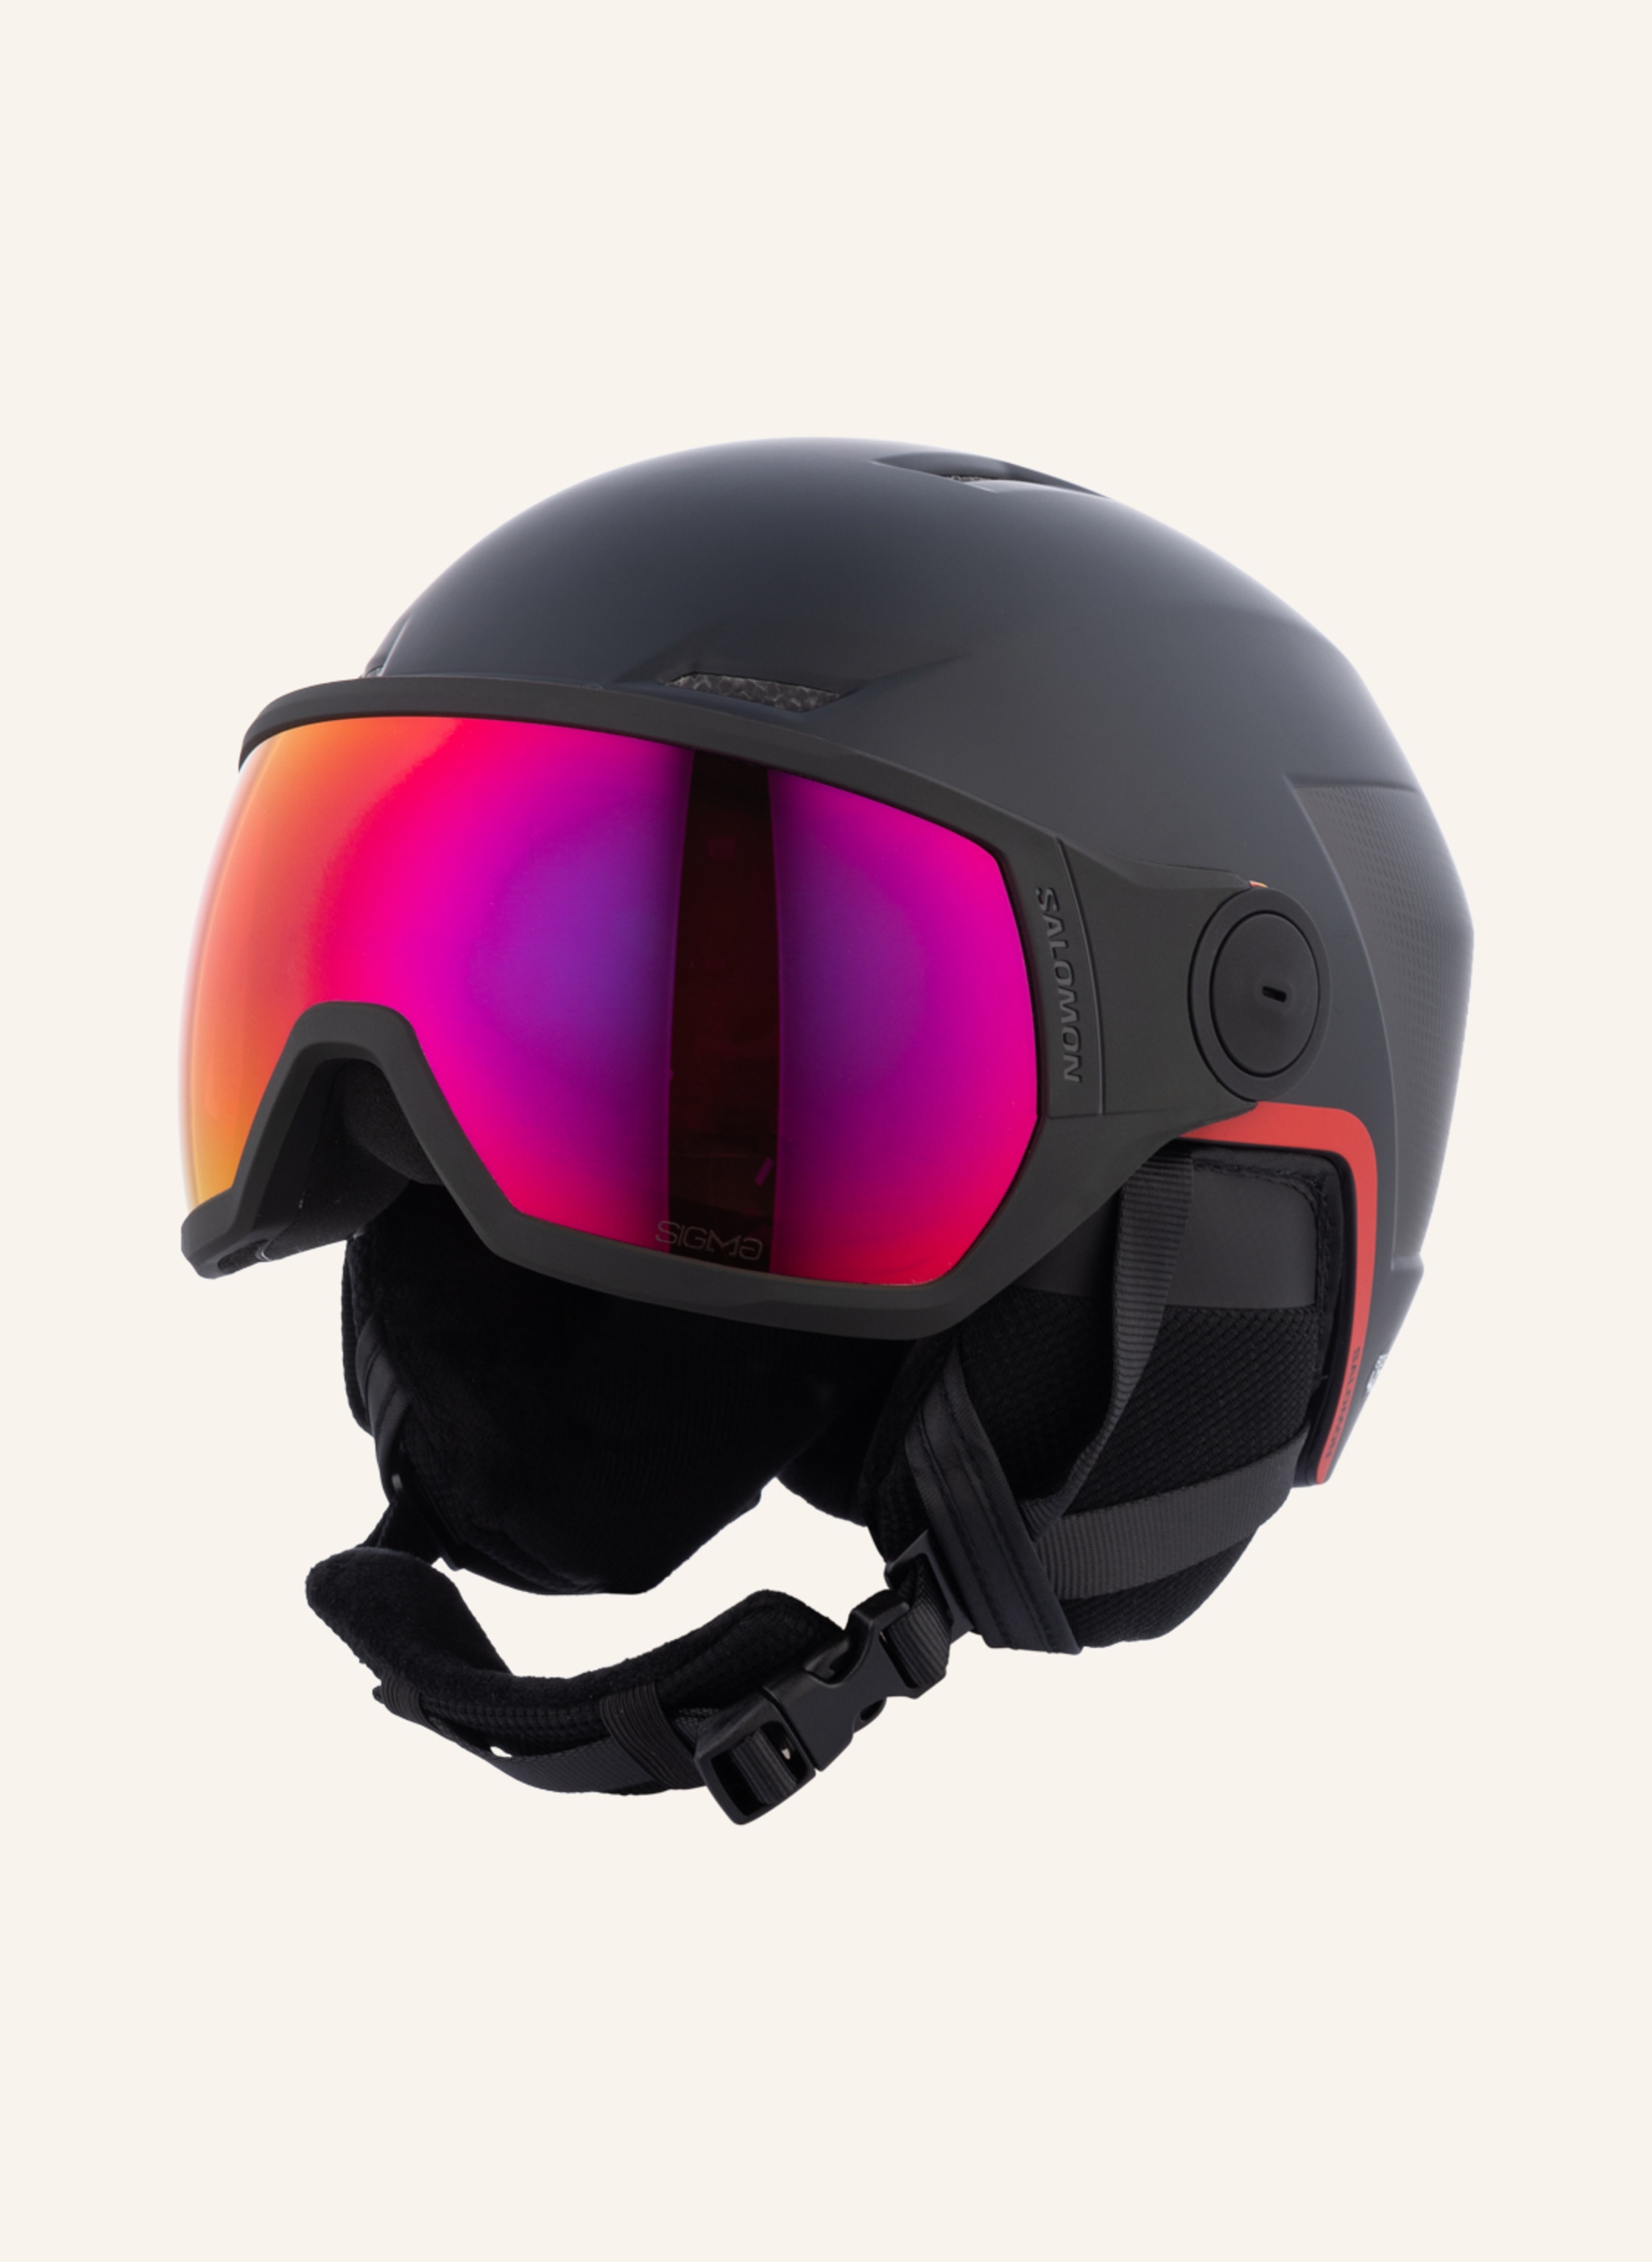 SALOMON Ski helmet PIONEER VISOR SIGMA with visor in red | Breuninger